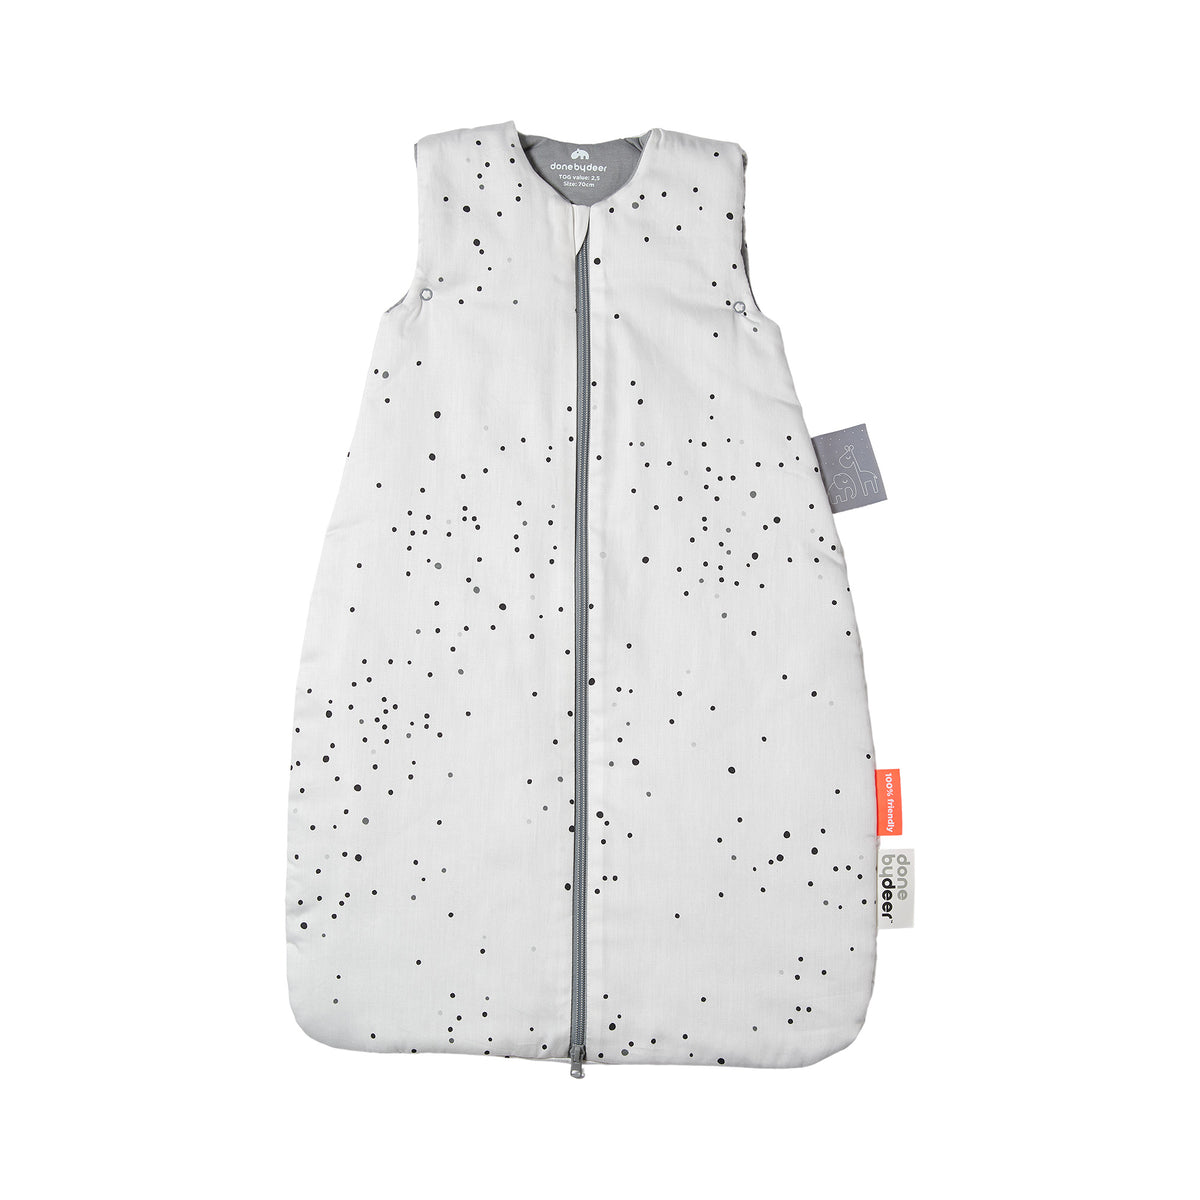 Sleepy bag 70 cm - Dreamy dots - White - Front